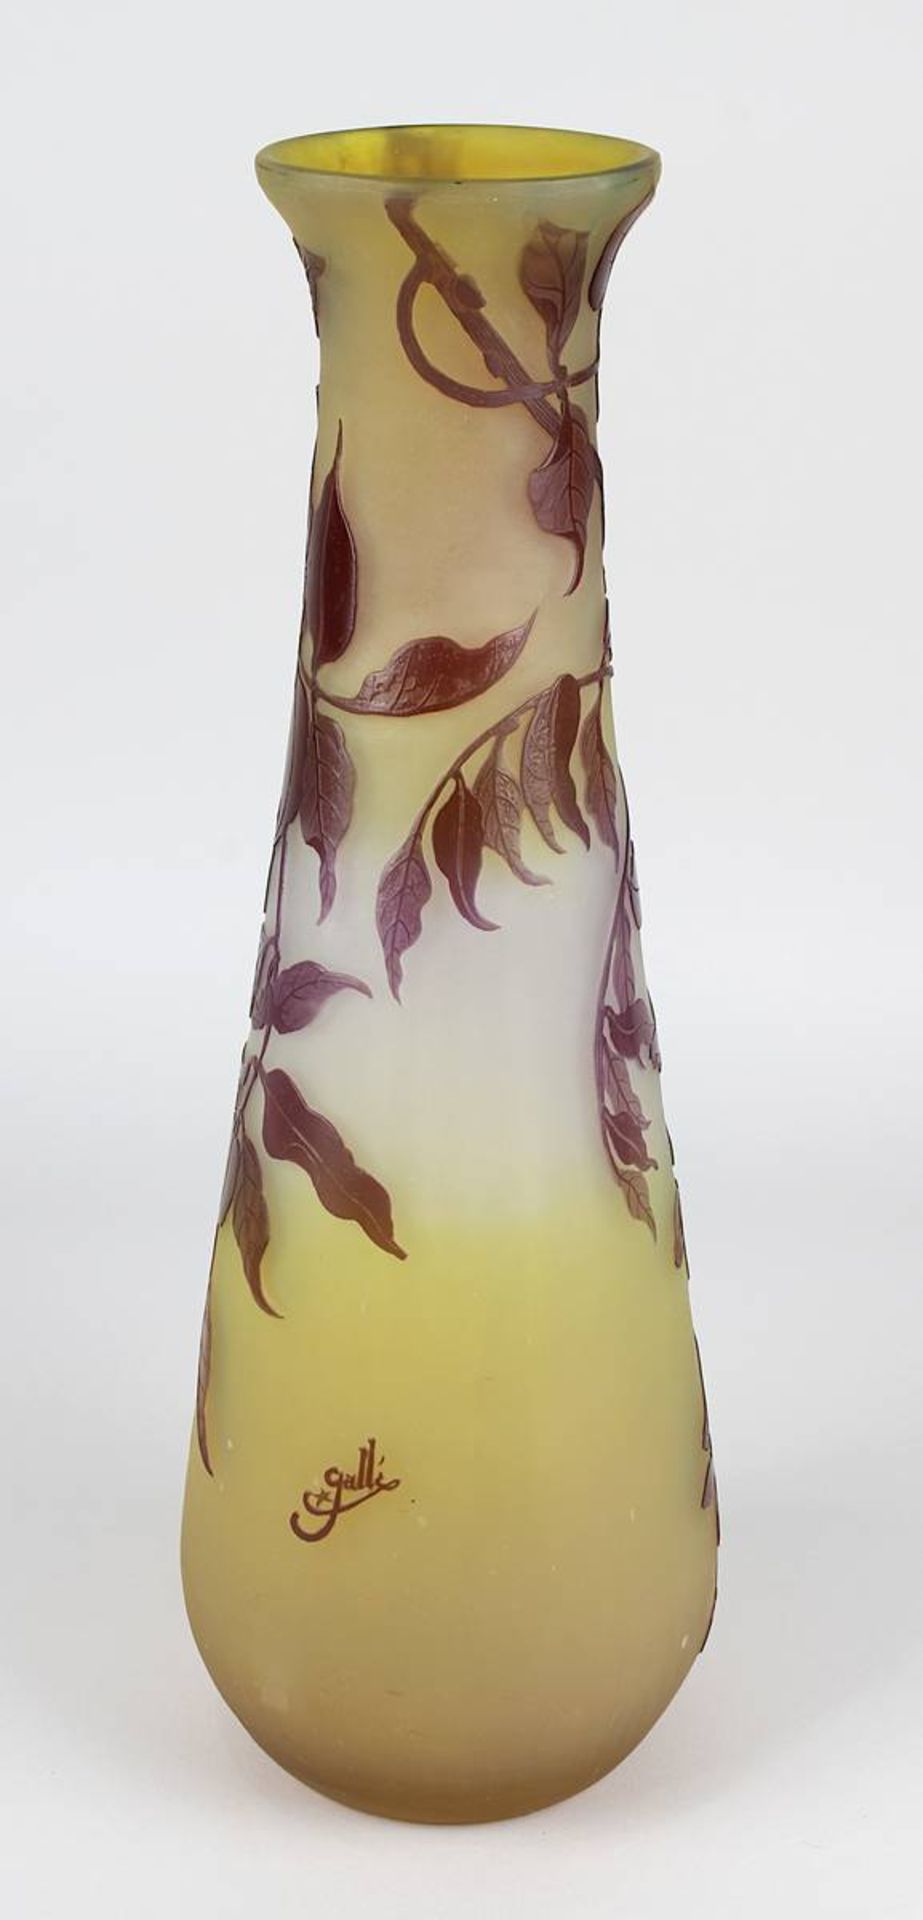 Gallé Jugendstil-Vase mit Glyziniendekor, Nancy 1904-1906, keulenförmiger Klarglaskorpus innen mit - Image 4 of 4